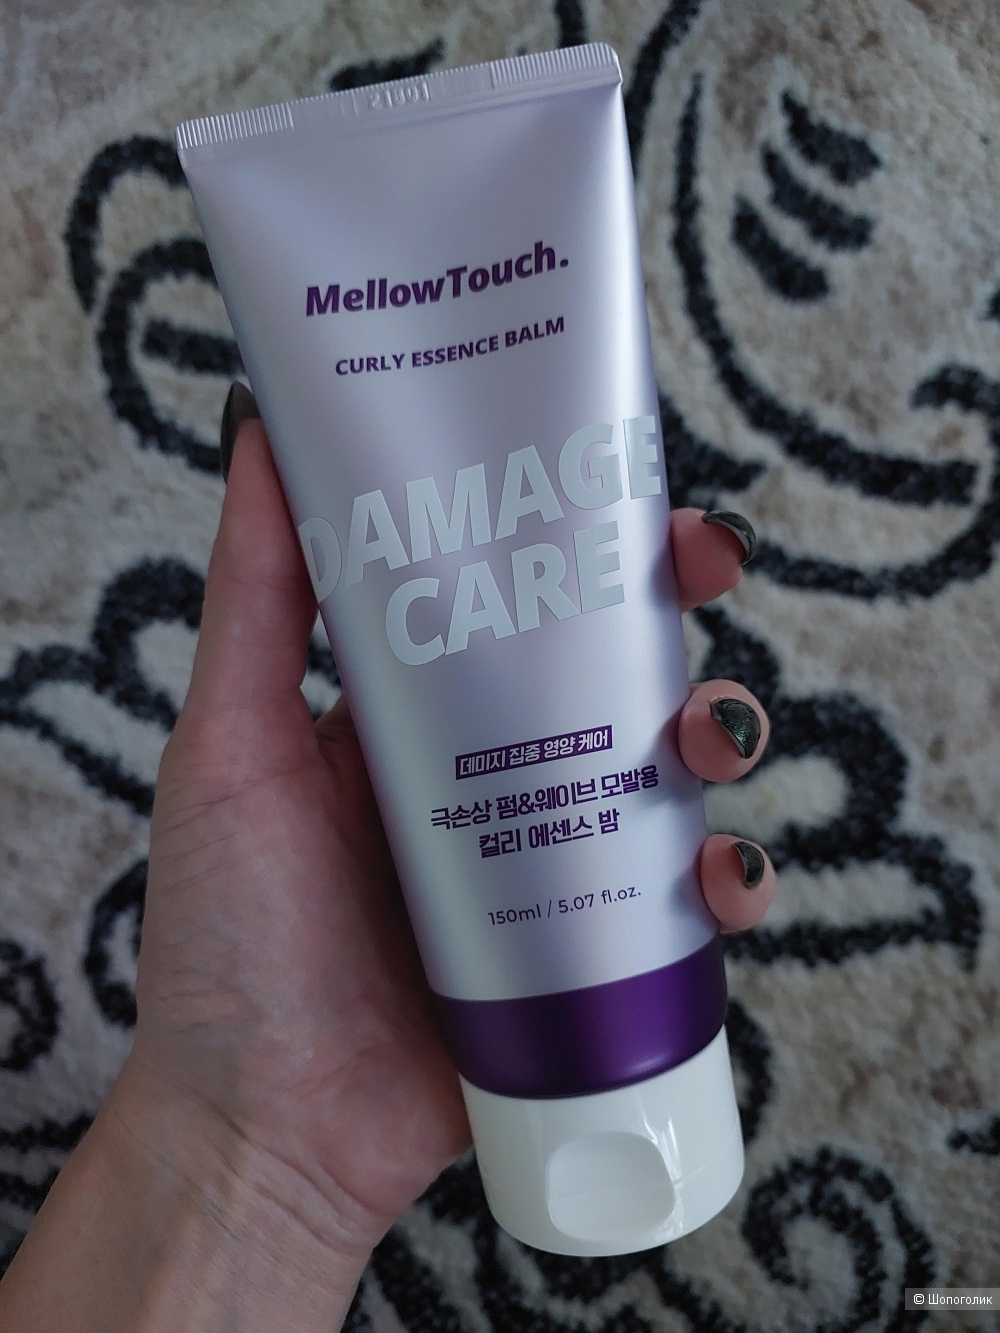 Mellow Touch- корейский​ бальзам​ для волос​ curly essence balm Damage Care